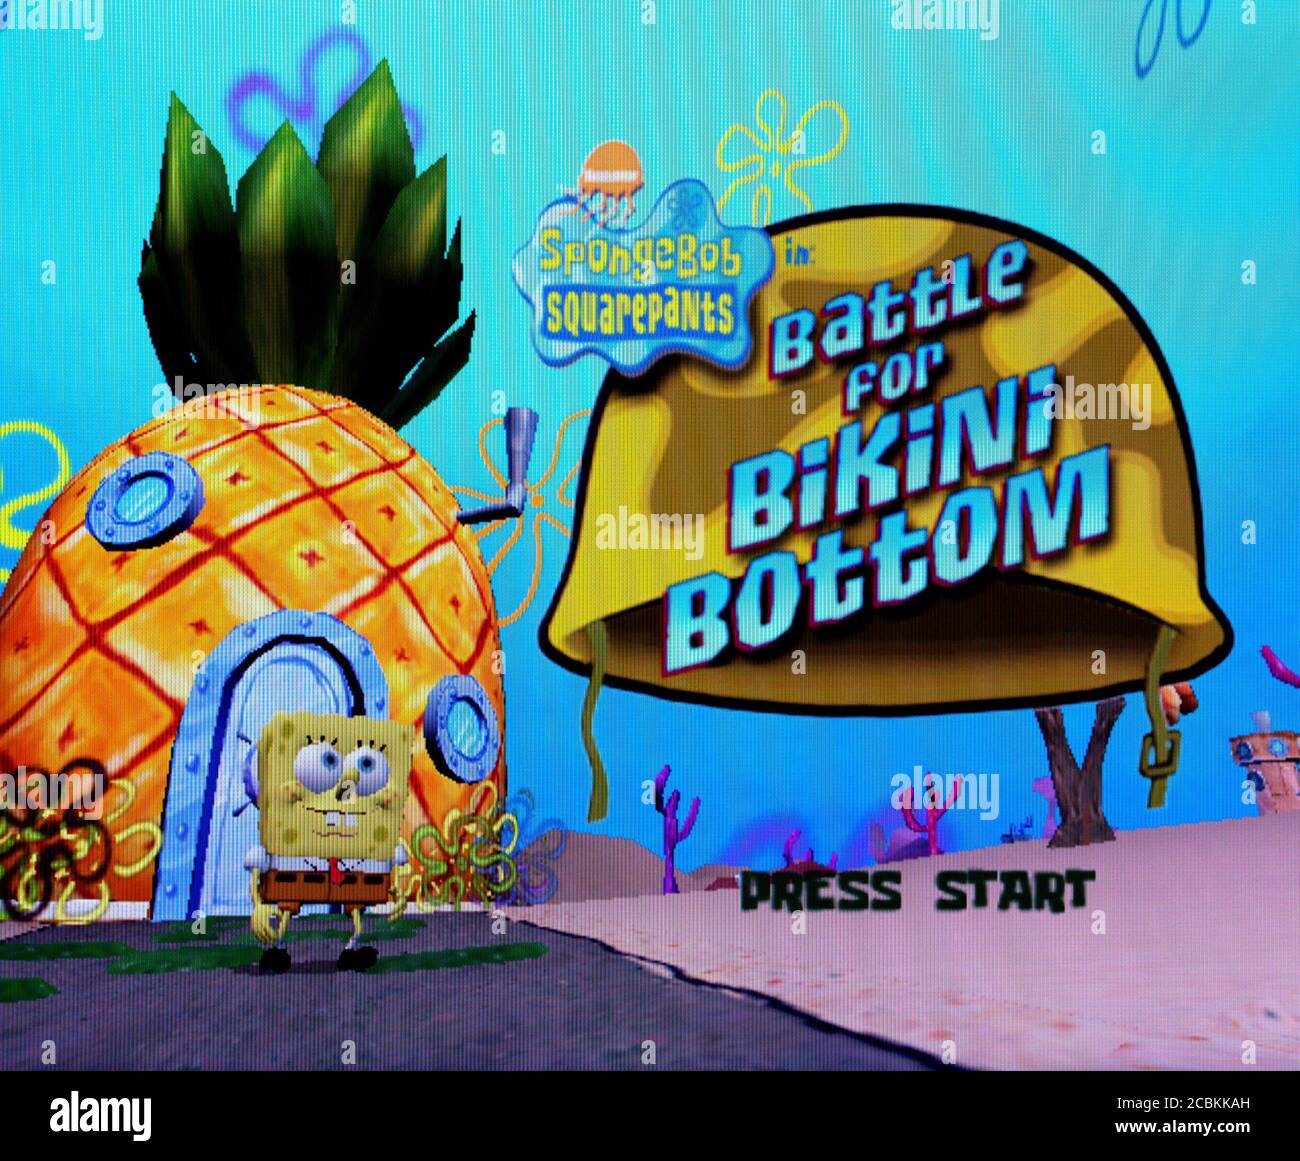 Spongebob Squarepants Battle for Bikini Bottom - Nintendo Gamecube  Videogame - Editorial use only Stock Photo - Alamy